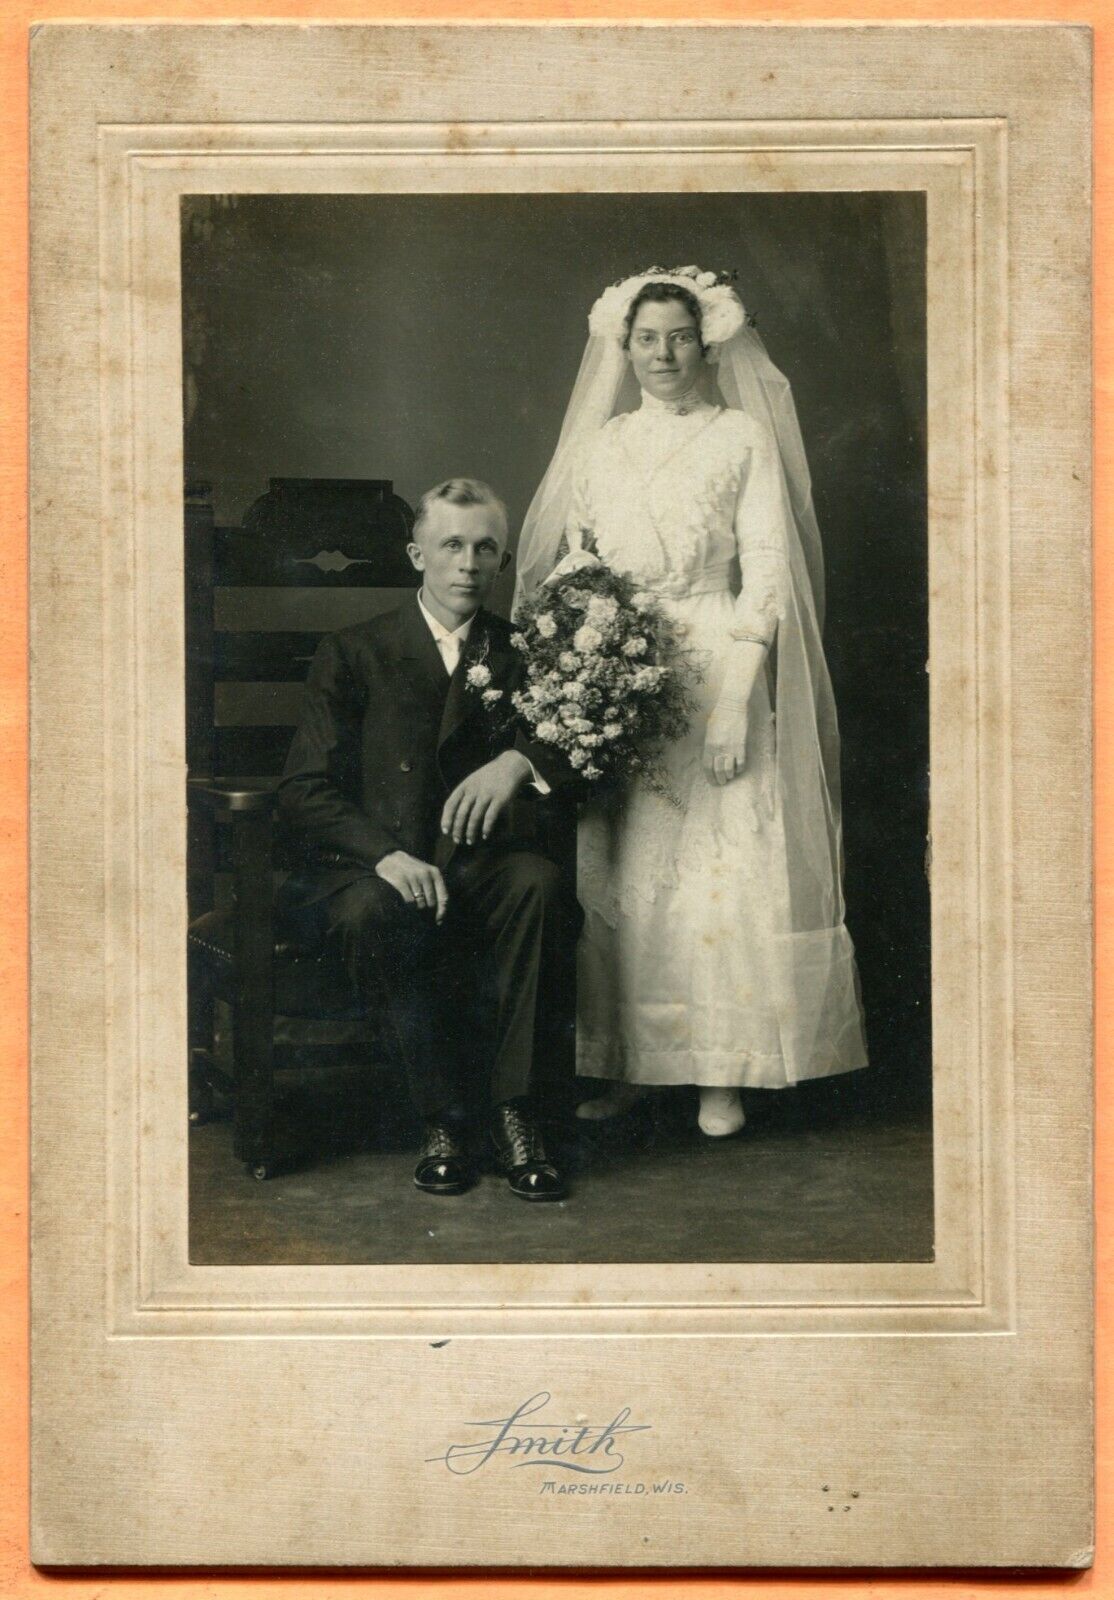 Marshfield WI Wedding Portrait by Smith, circa 1910 Notes on back